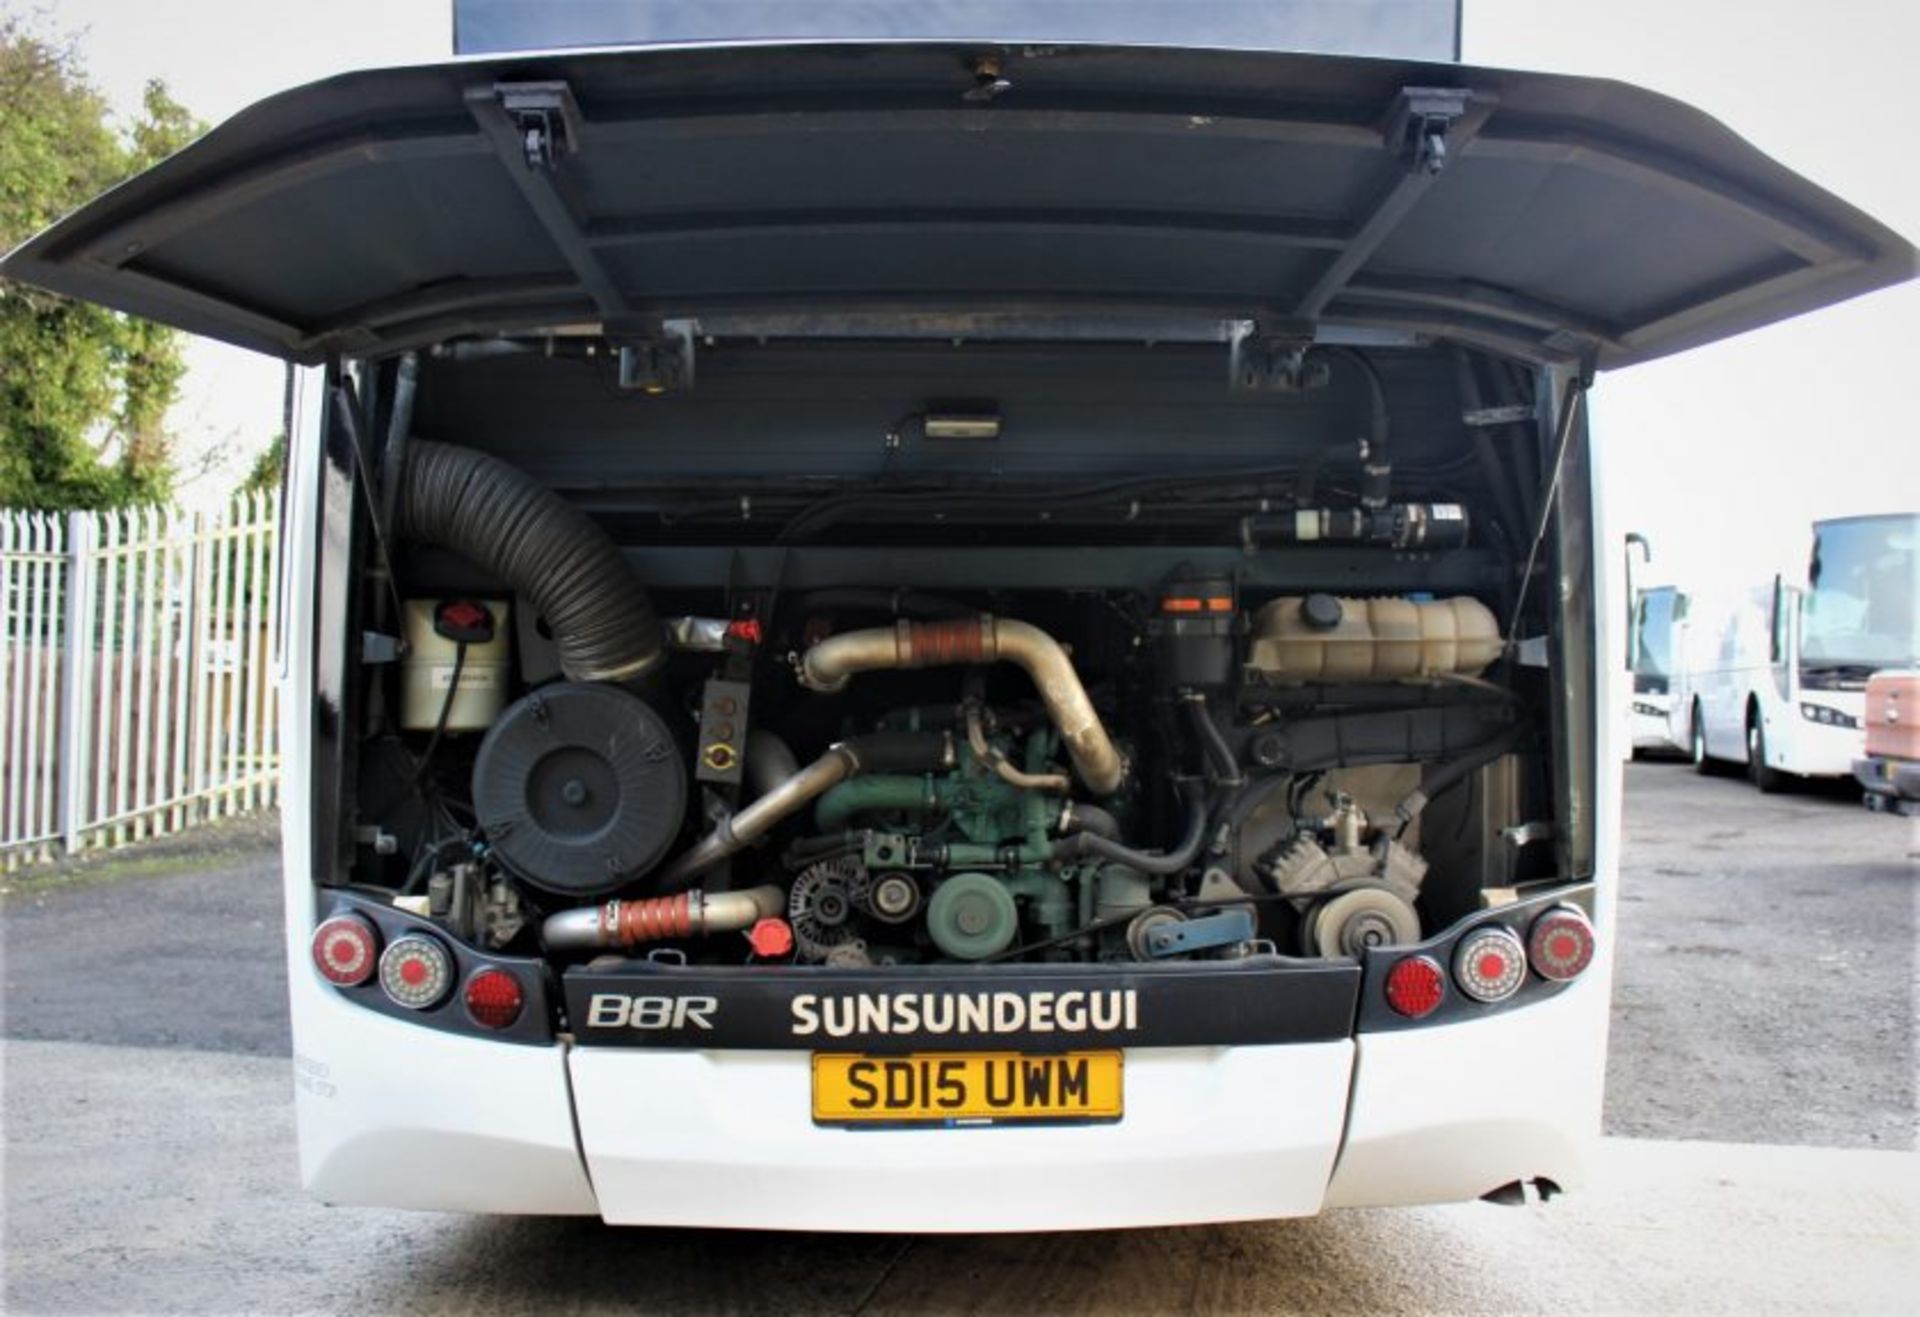 2015 | Volvo SunSundegui SC5 41 Seater B8R Euro 6 Coach | Reg: SD15 UWM | 154,687 KMS - Image 9 of 20